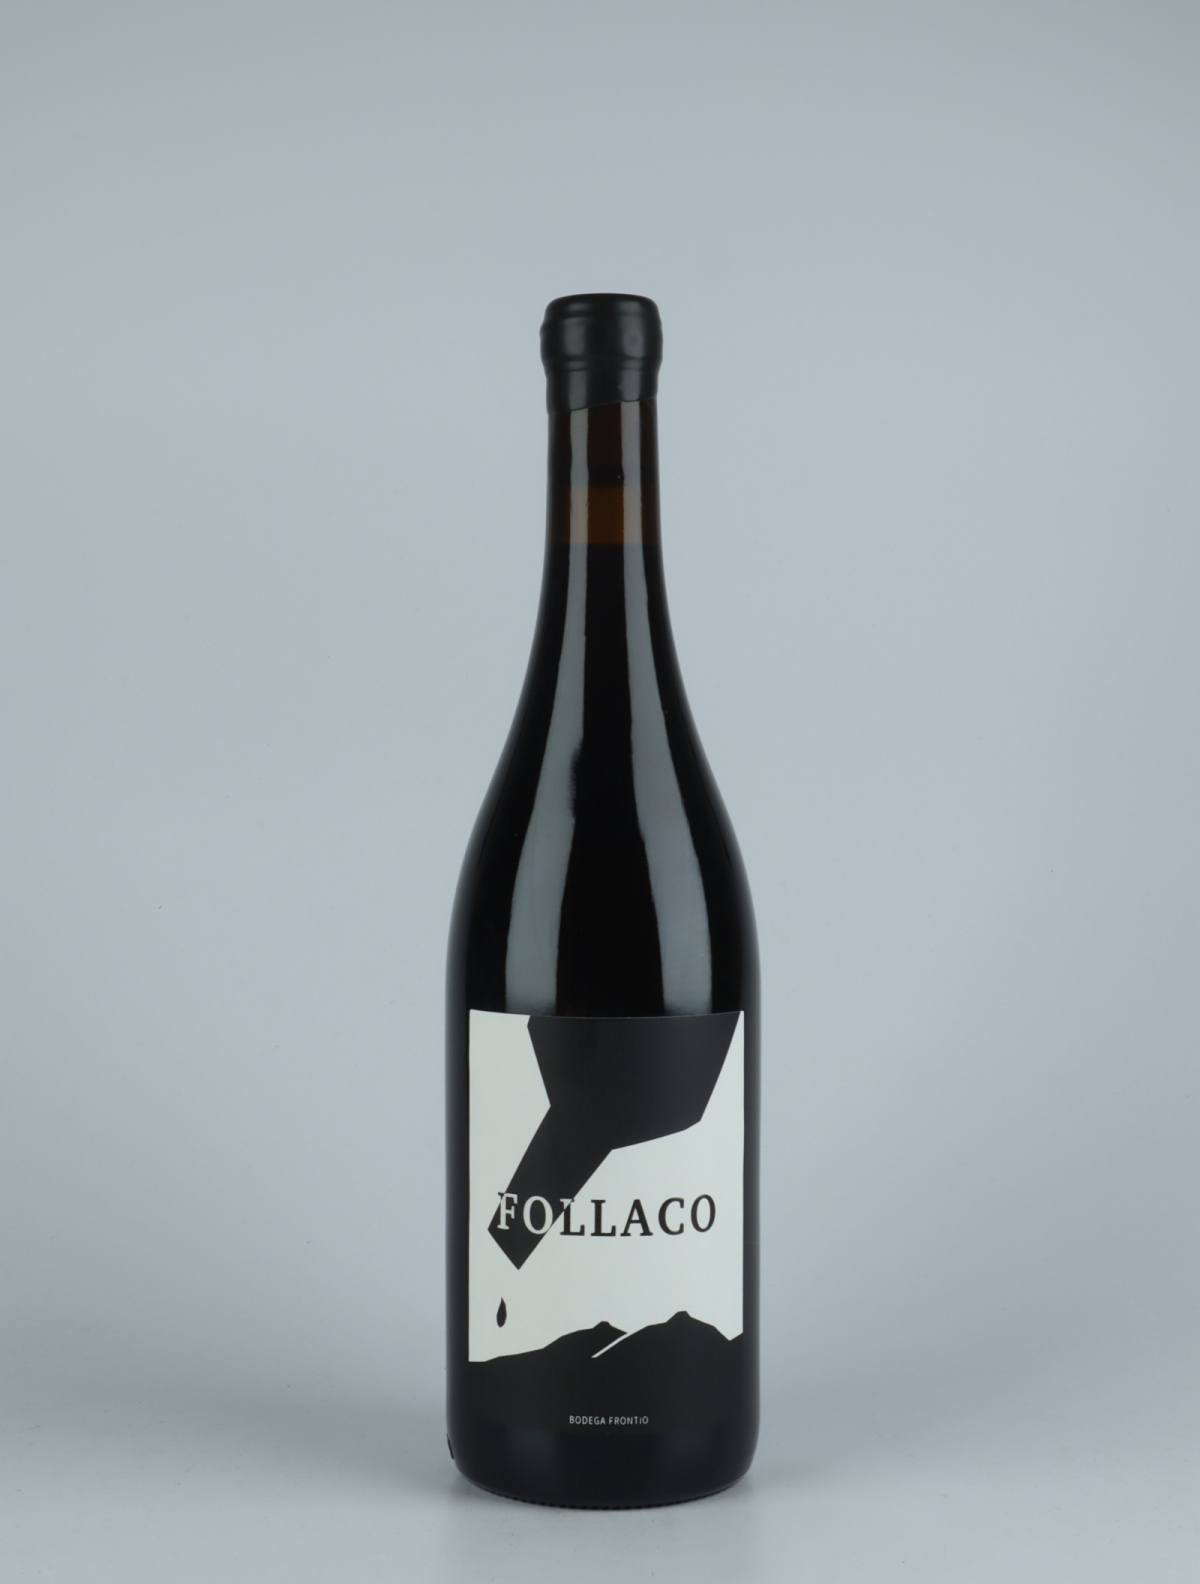 En flaske 2020 Follaco Rødvin fra Bodega Frontio, Arribes i Spanien